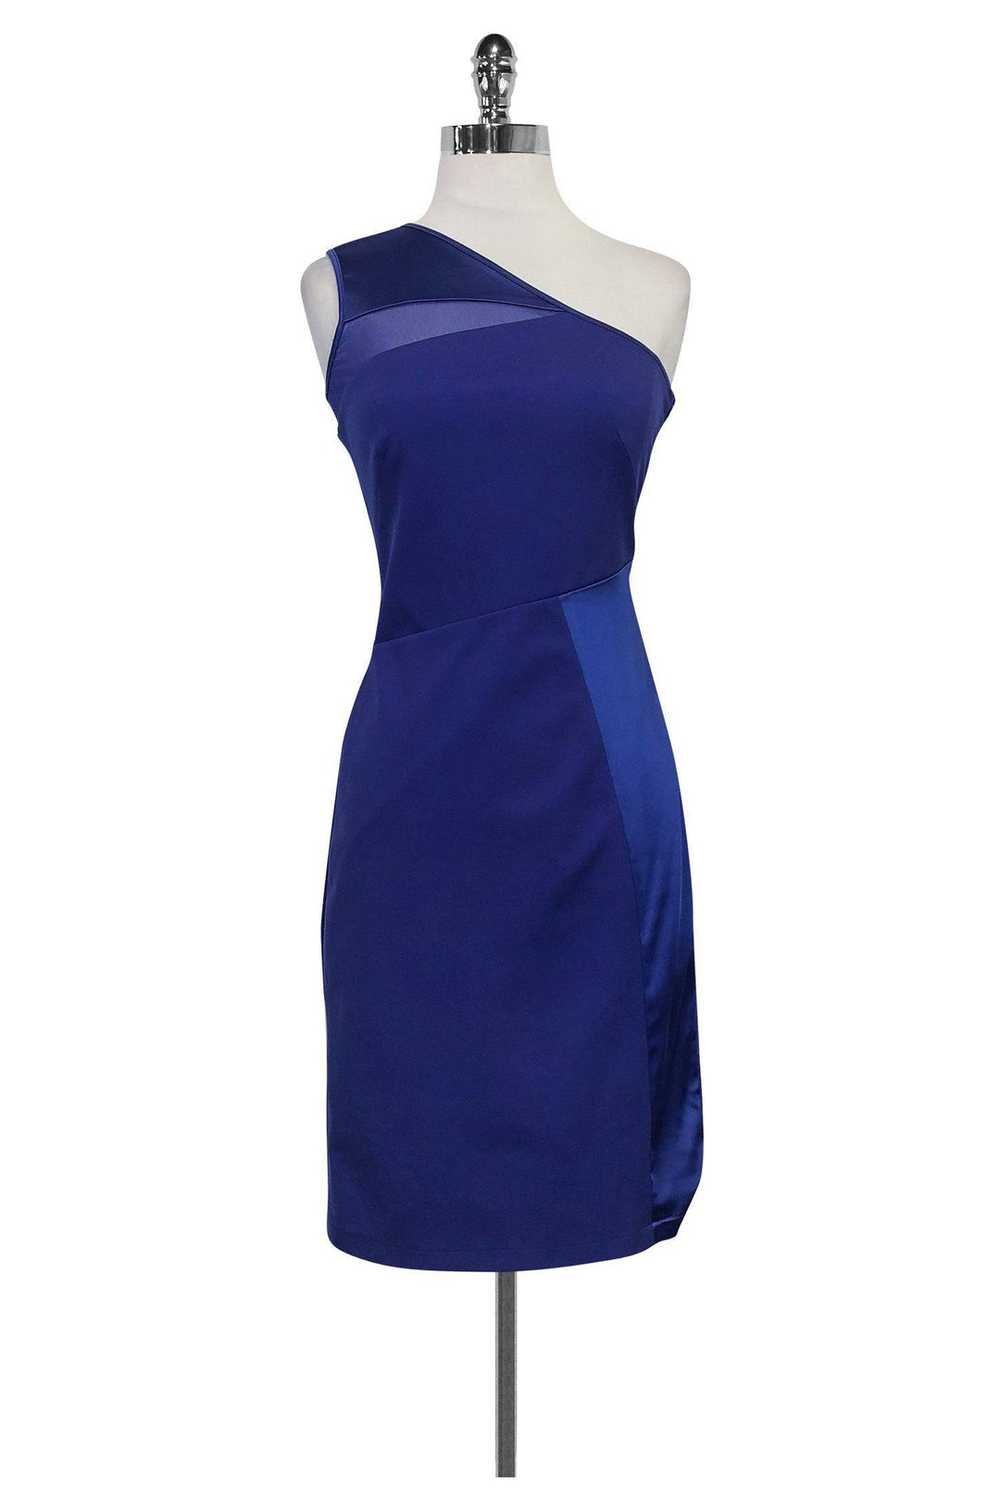 Halston Heritage - Purple One Shoulder Dress Sz XS - image 1